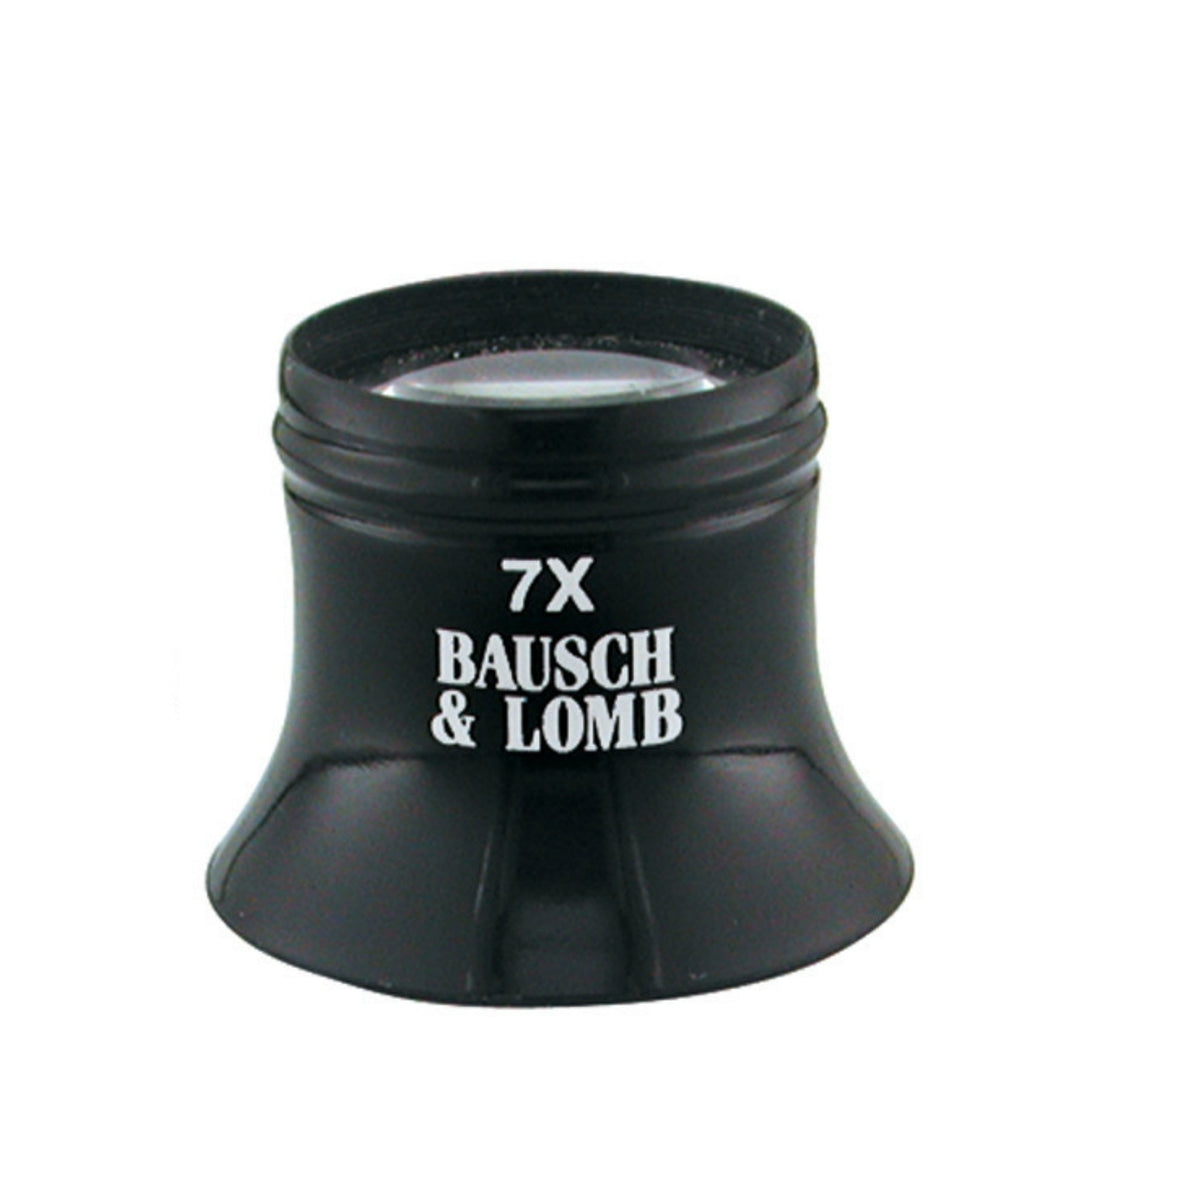 10X Bausch & Lomb Coddington Eye Loupe